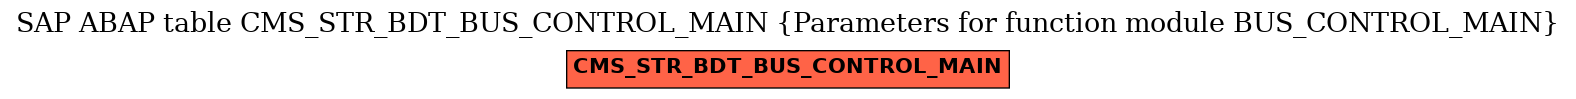 E-R Diagram for table CMS_STR_BDT_BUS_CONTROL_MAIN (Parameters for function module BUS_CONTROL_MAIN)